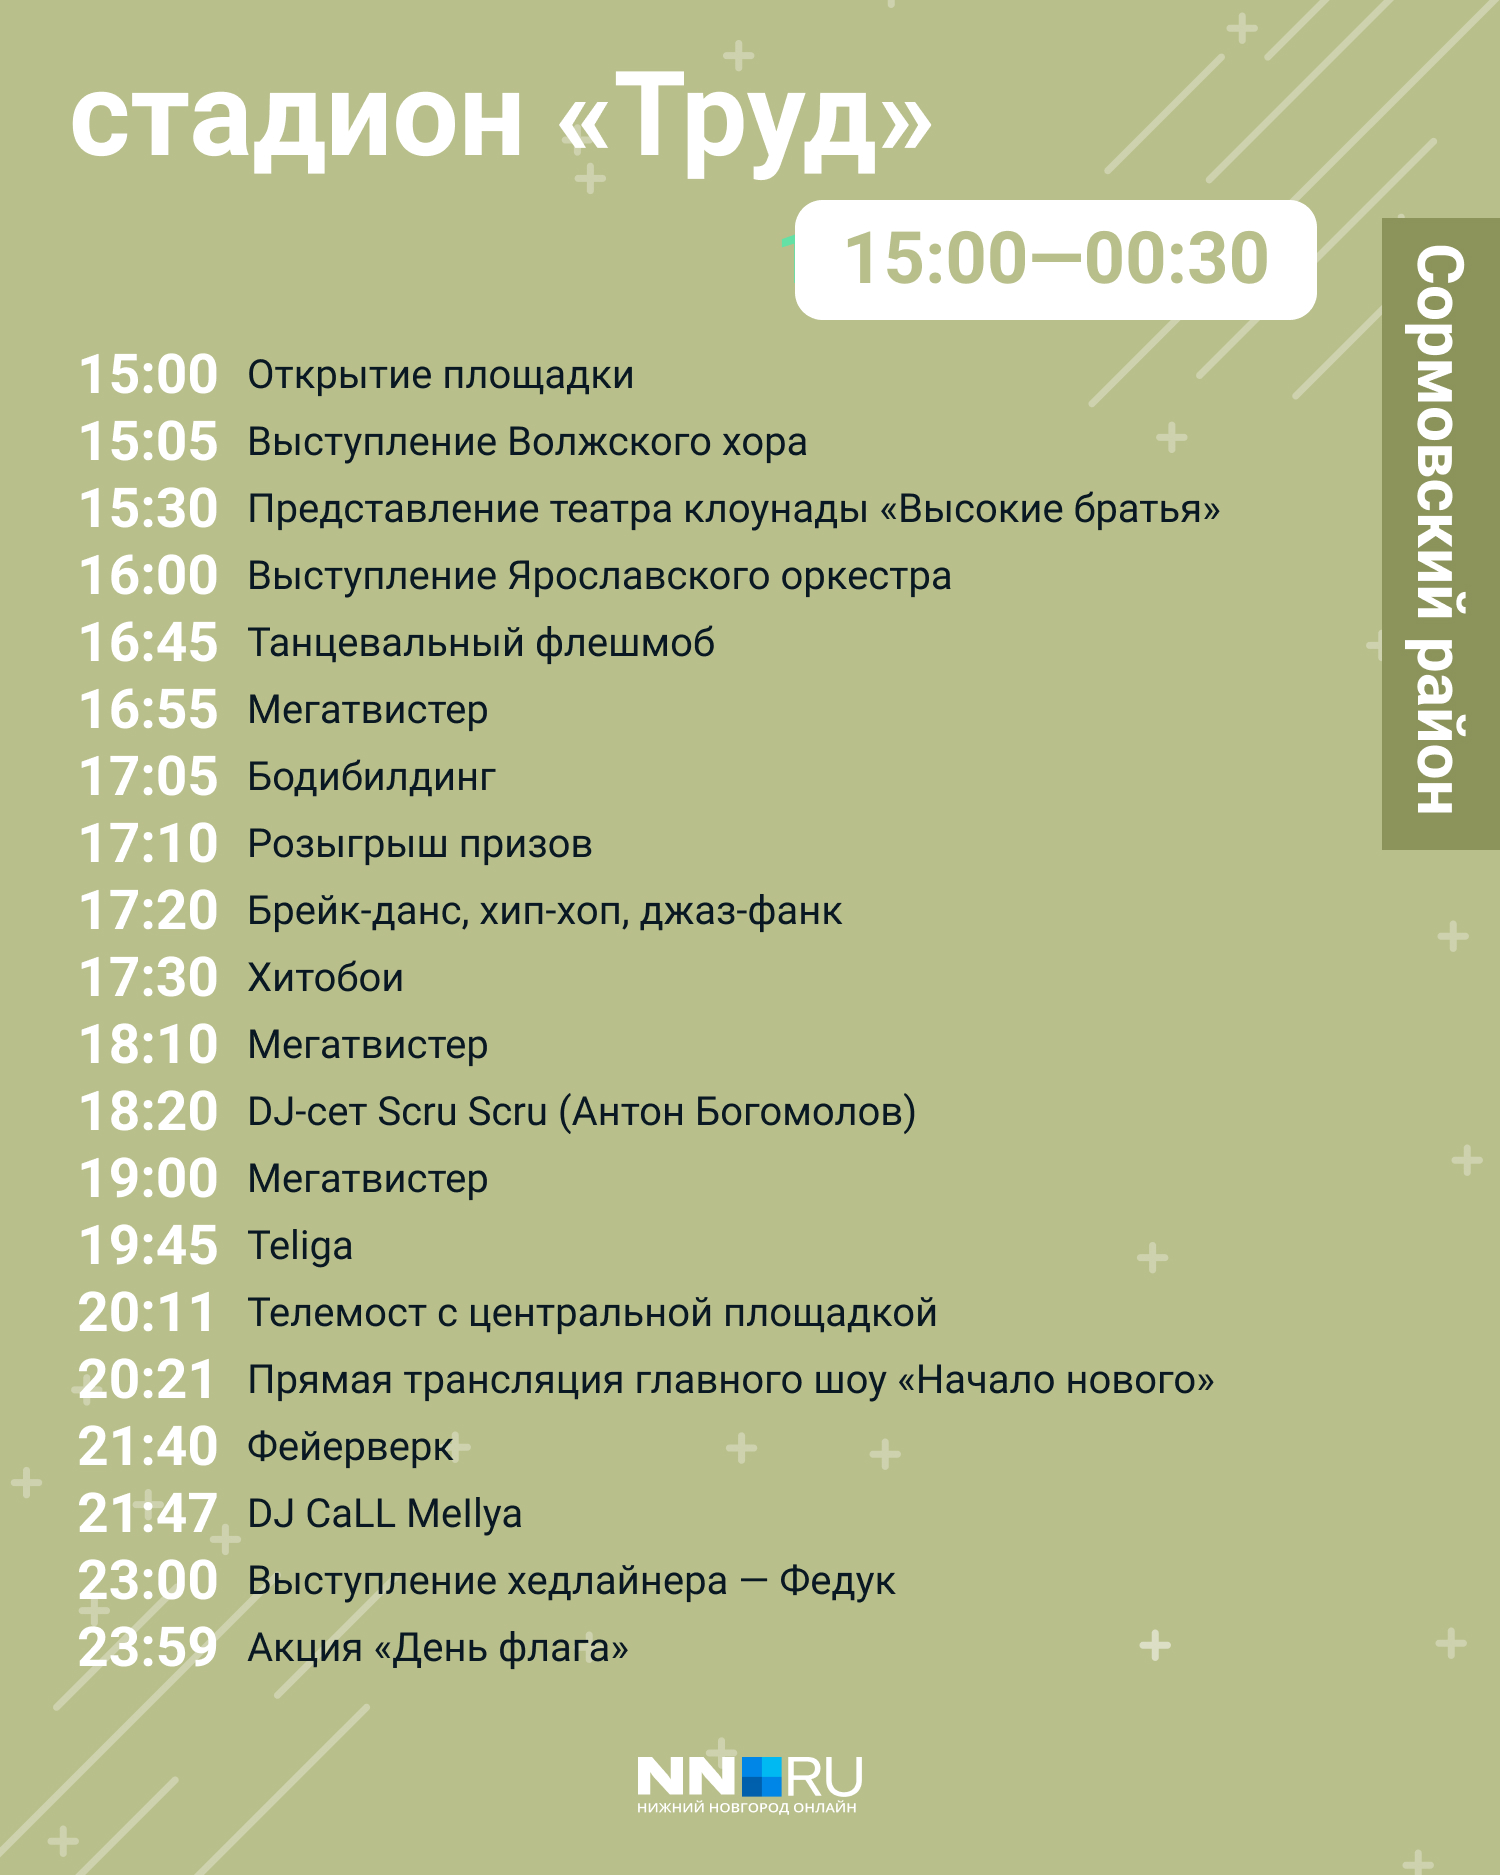 Программа мероприятий в Сормовском районе